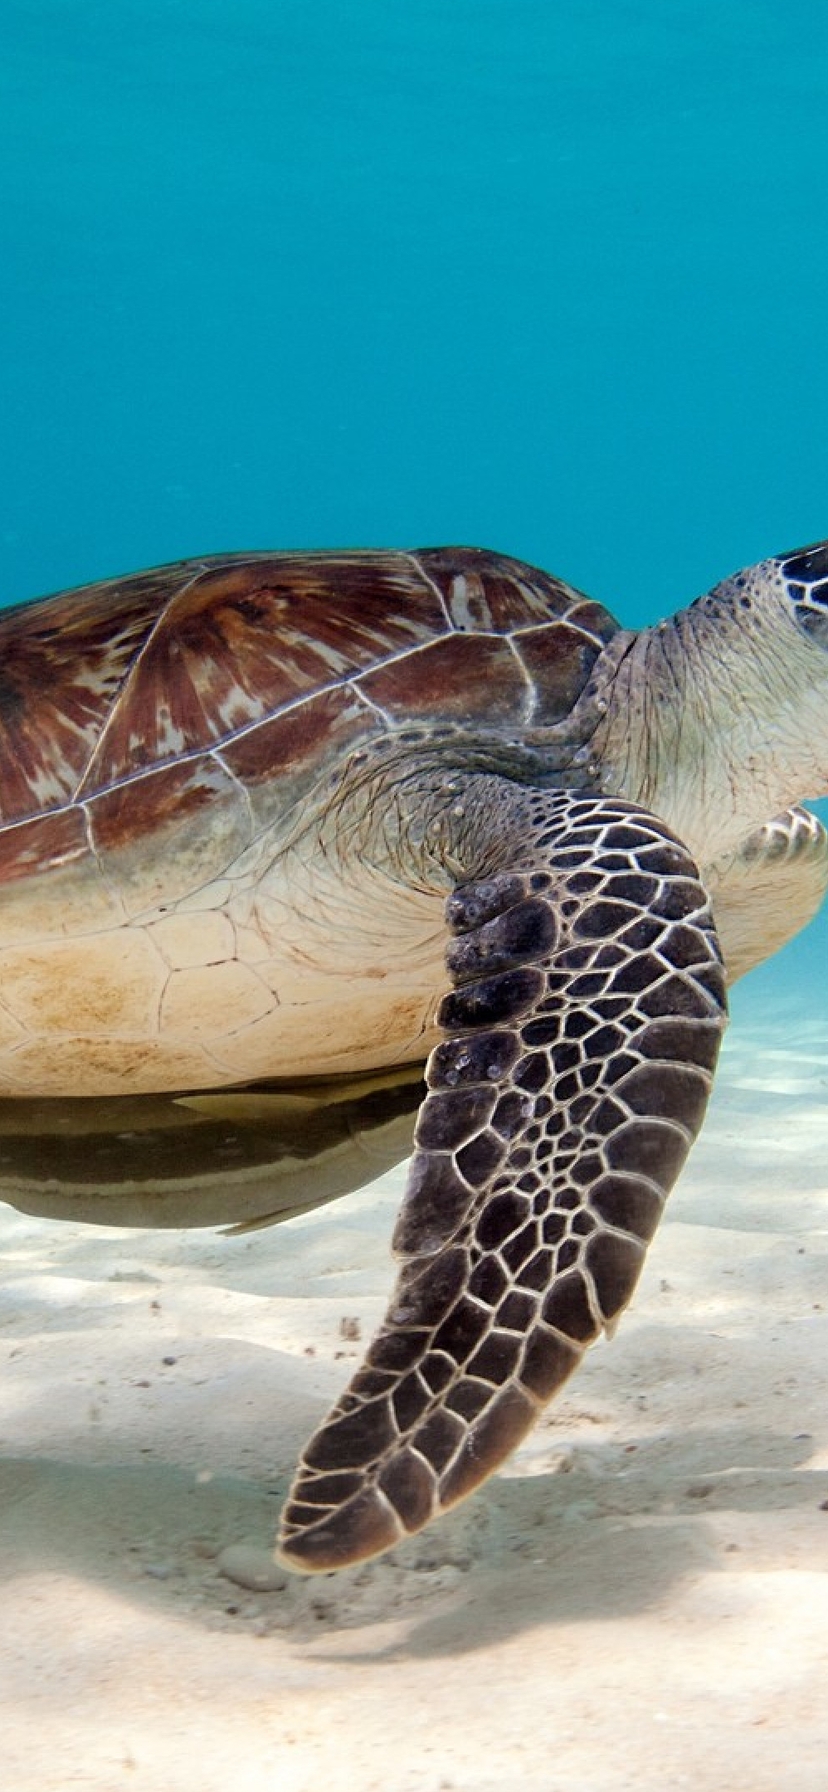 Image: Turtle, shell, sea floor, sand, water, shade